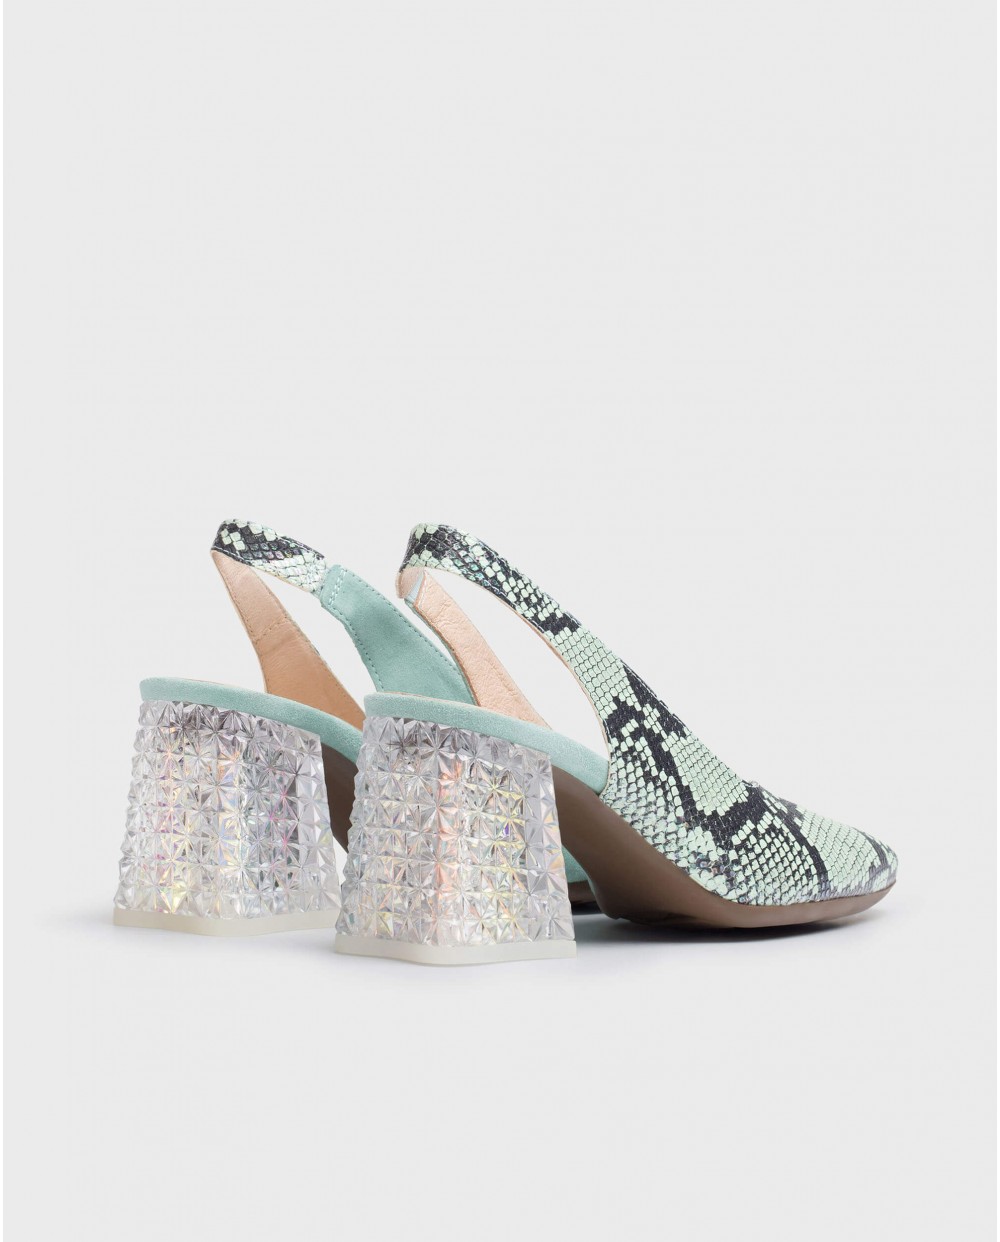 Wonders-Heels-High heeled shoe with jewel detail